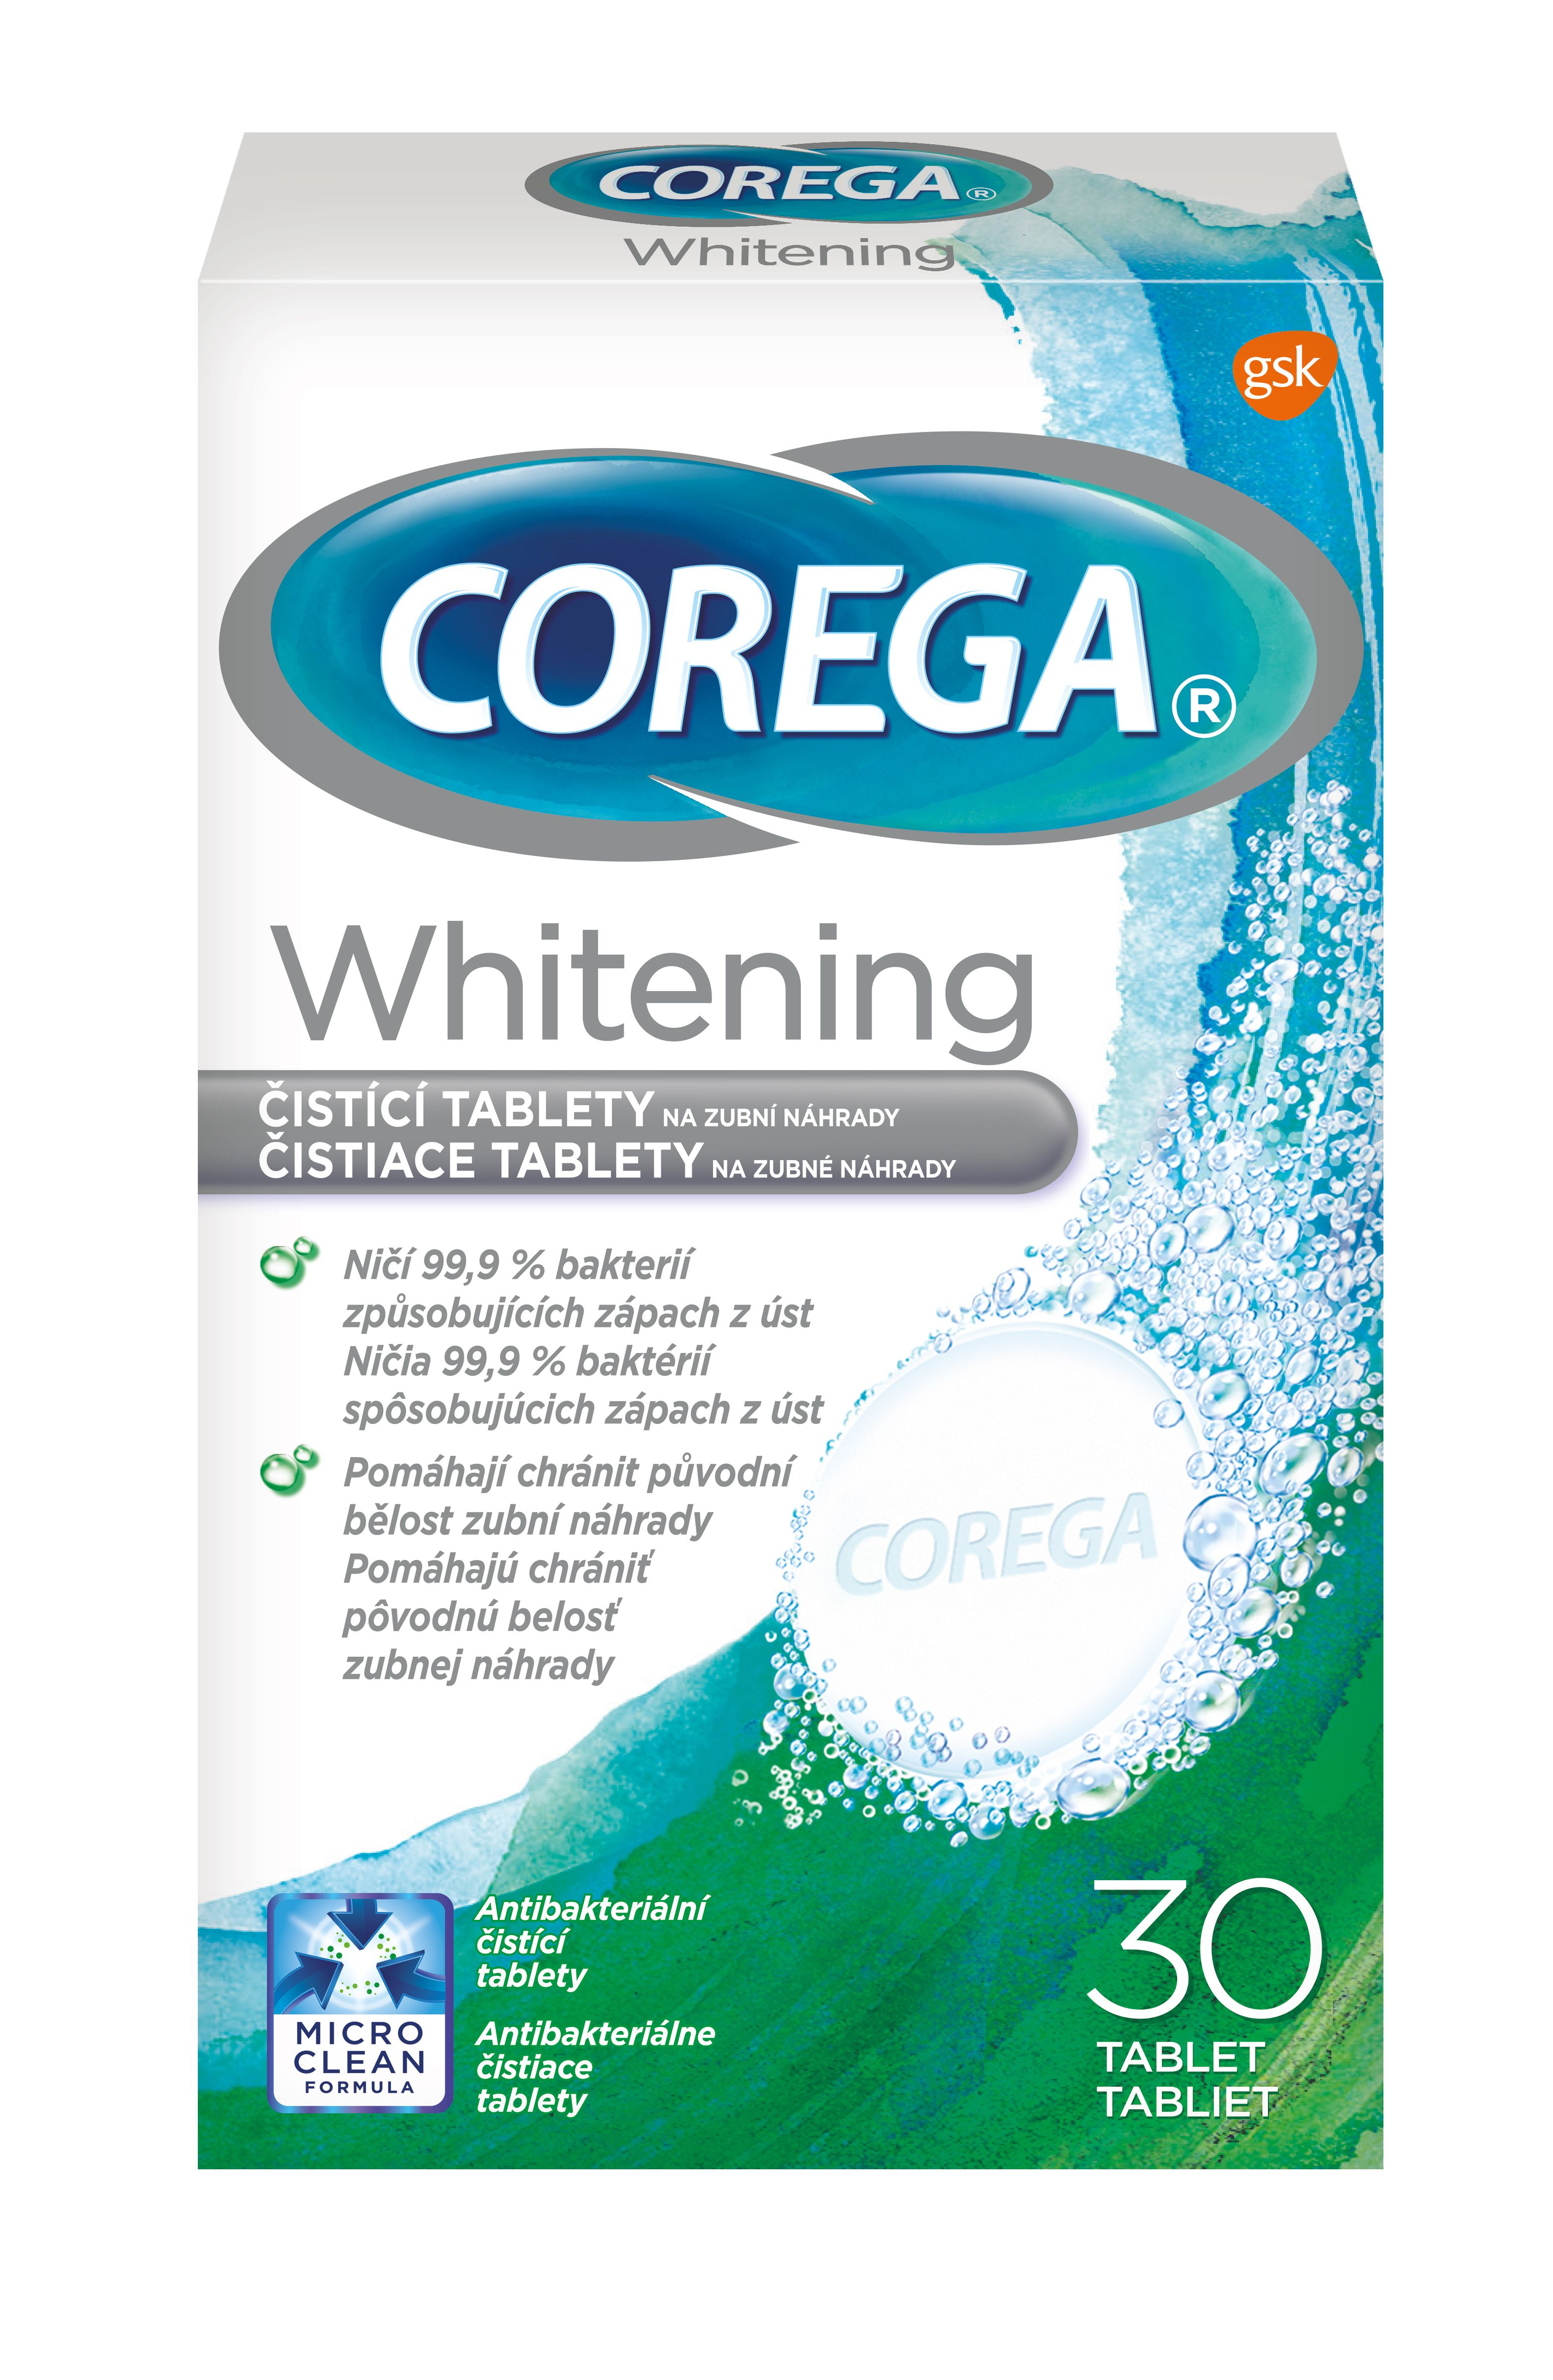 Corega Whitening Antibakteriální tablety 30 ks Corega